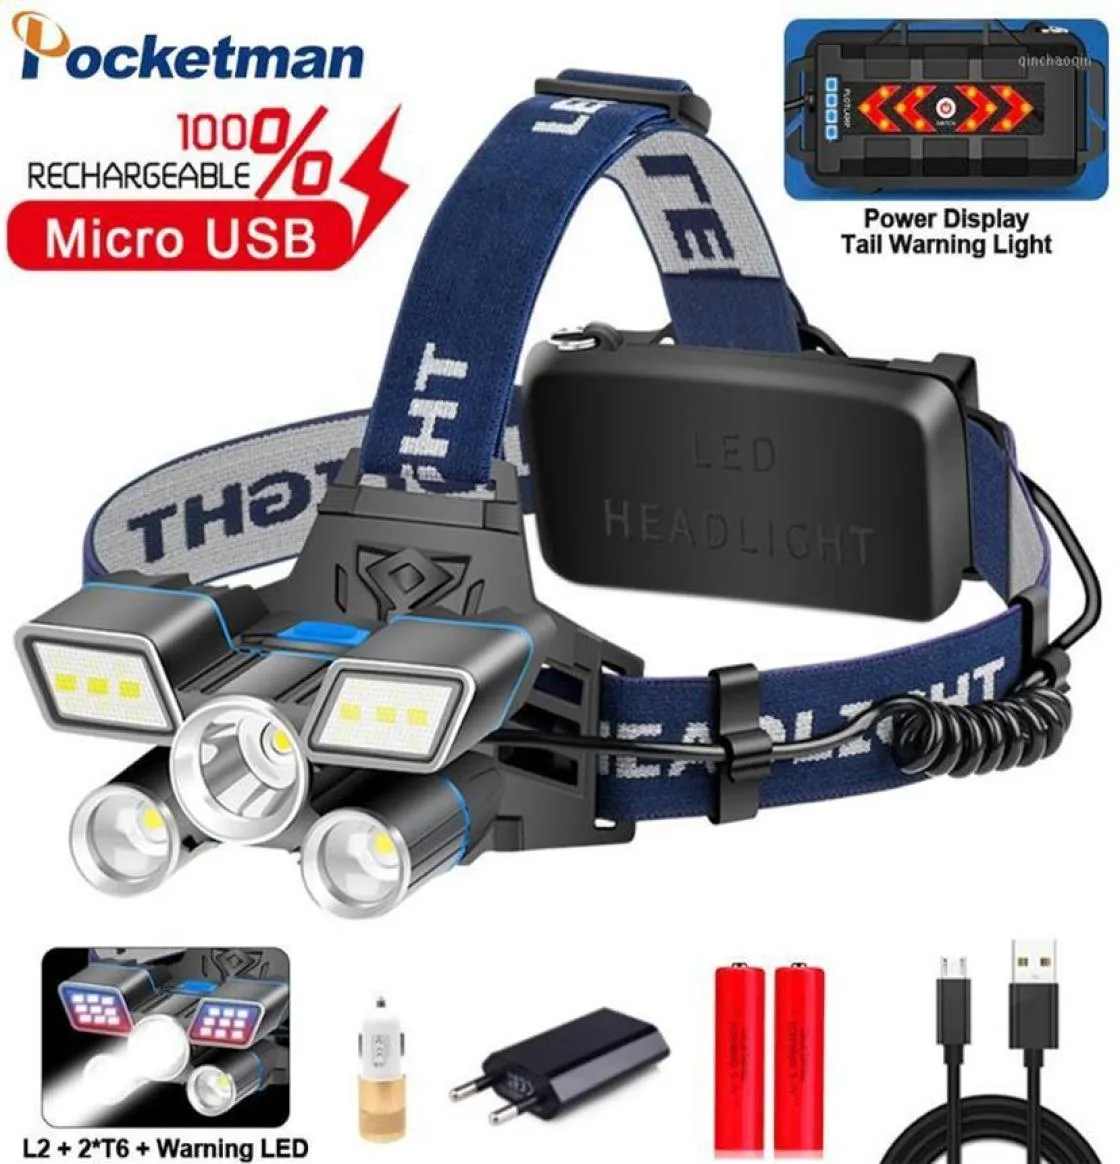 Parlaklar Kırmızı Mavi Beyaz Işık LED far L2 2 T6 Far USB USB Şarj Edilebilir Kafa Işığı Tail Uyarısı Su Geçirmez1254Y6092630